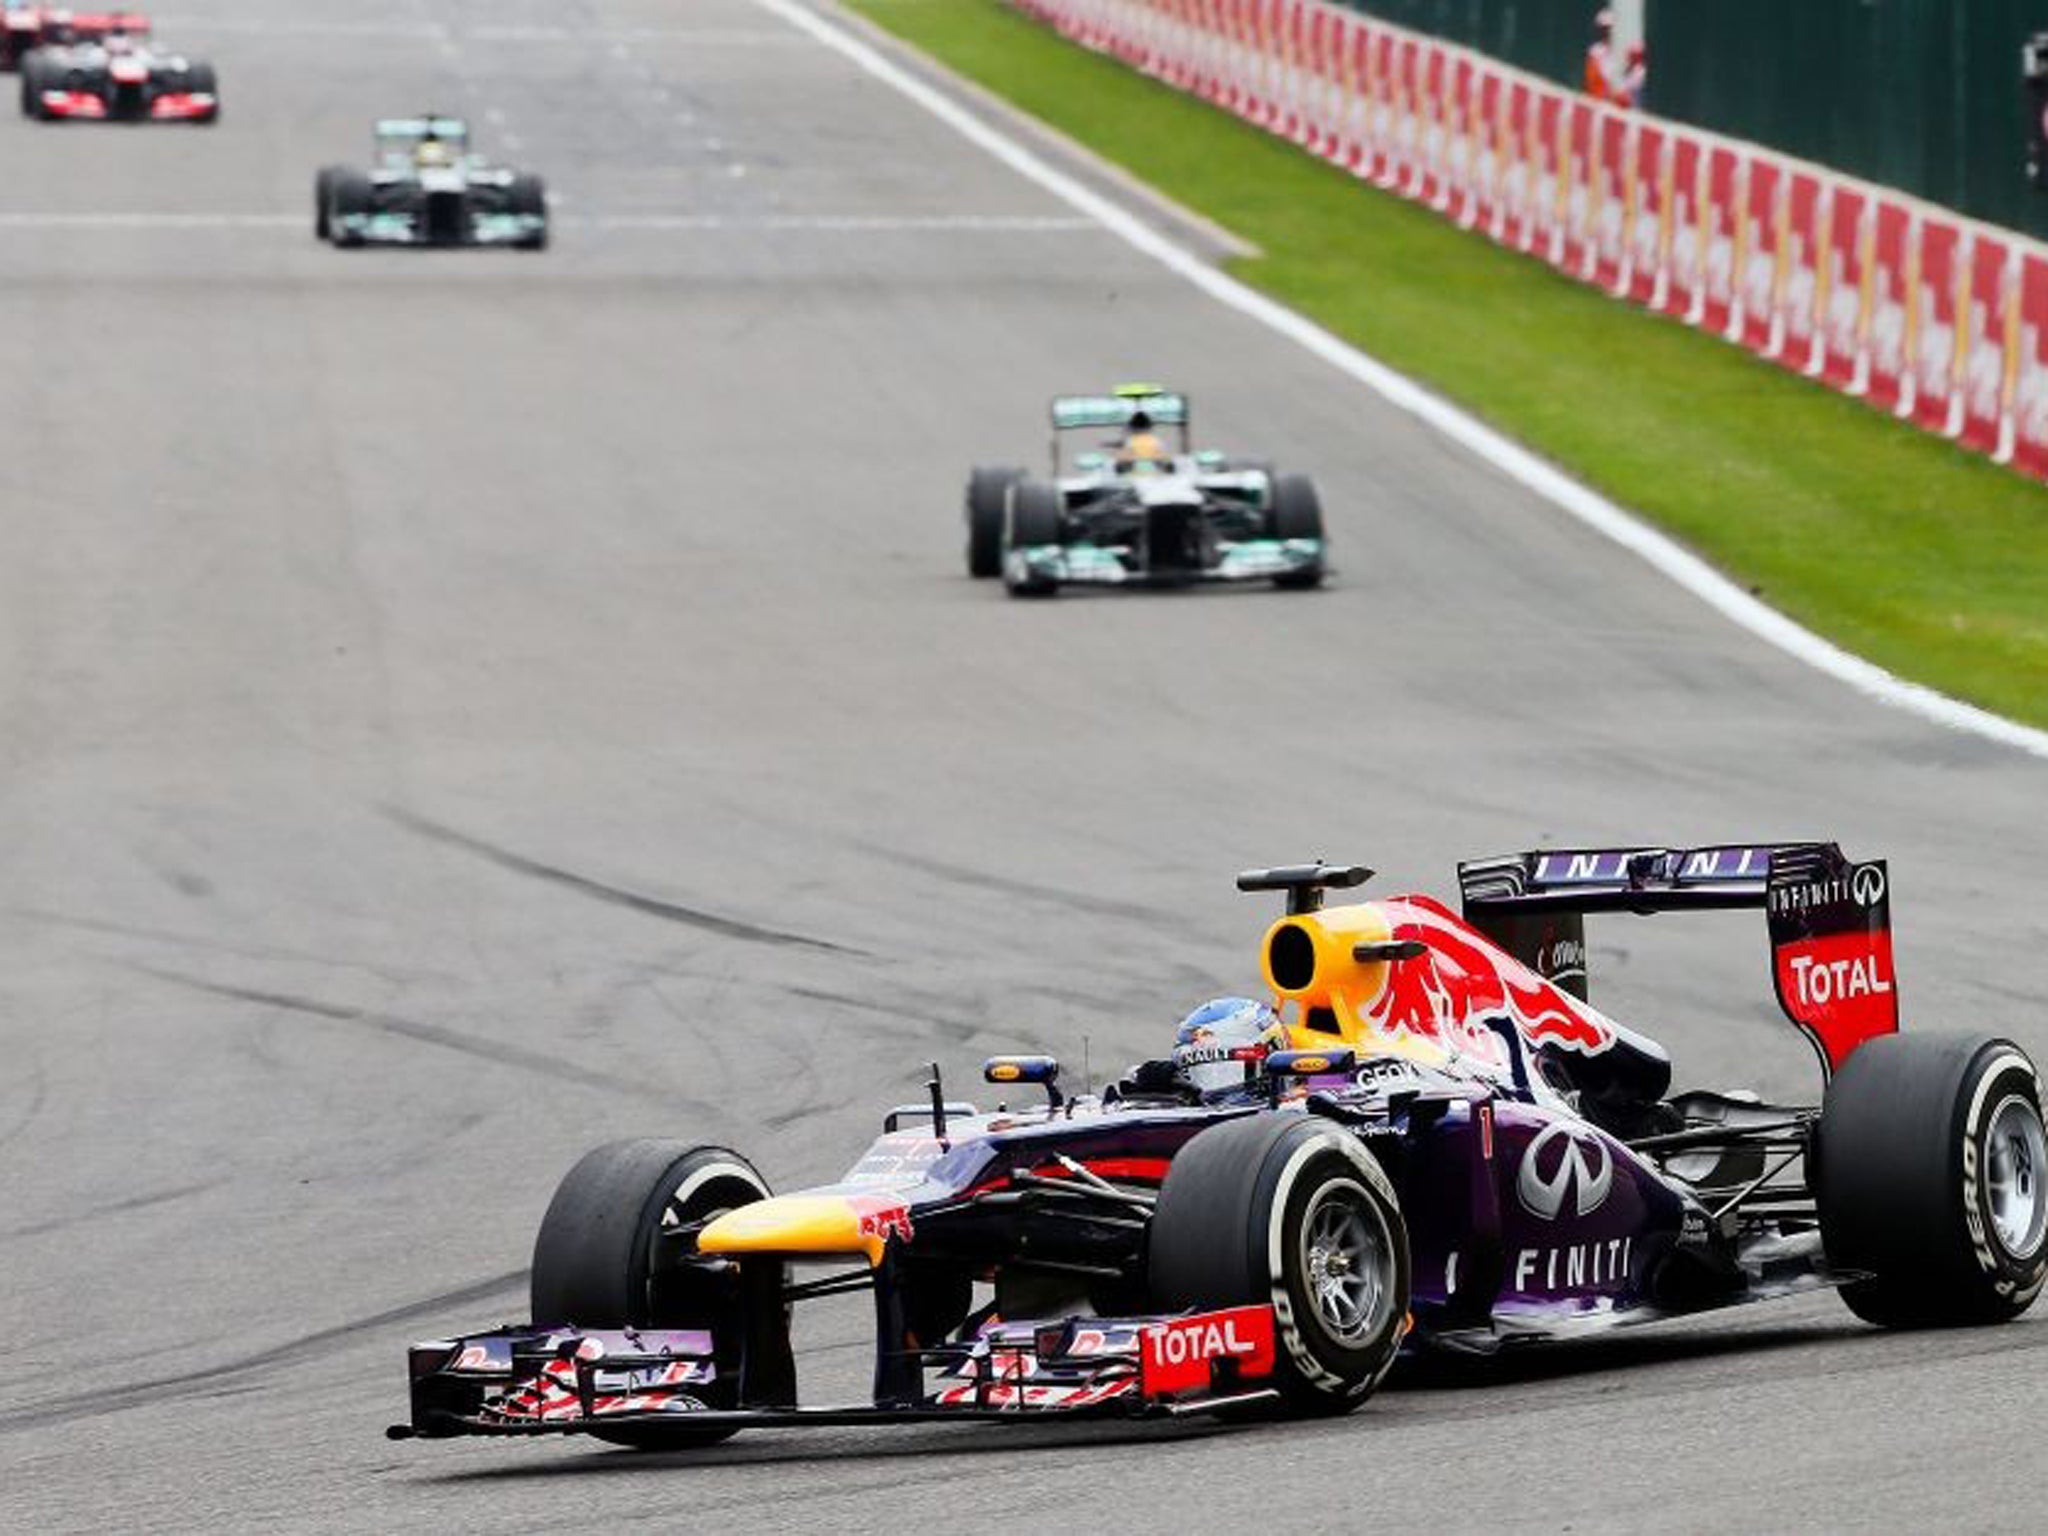 Sebastian Vettel cruised to the 31st win of his Formula One career